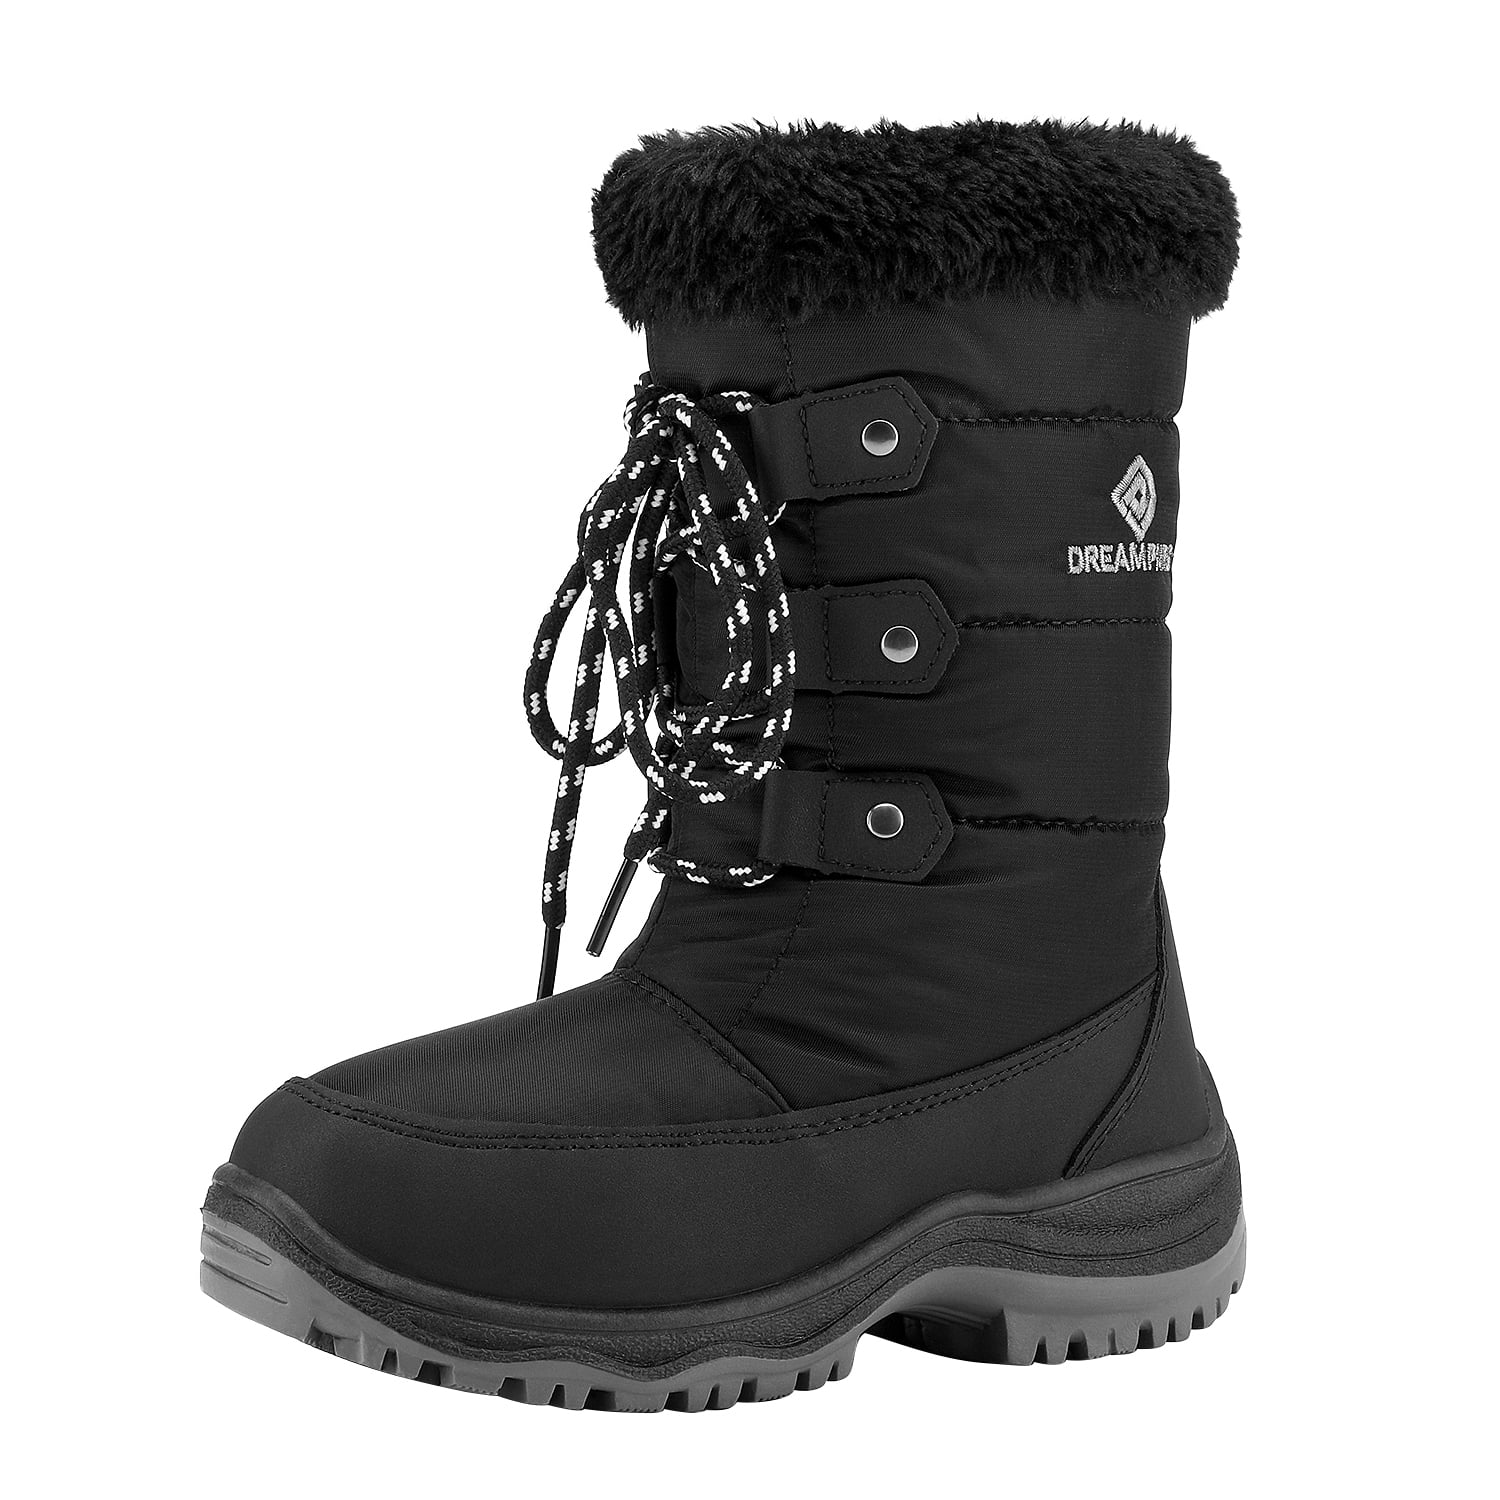 DREAM PAIRS Nordic Boys Girls Beige White Knee High Waterproof Winter Snow Boots Size 13 M US Little Kid